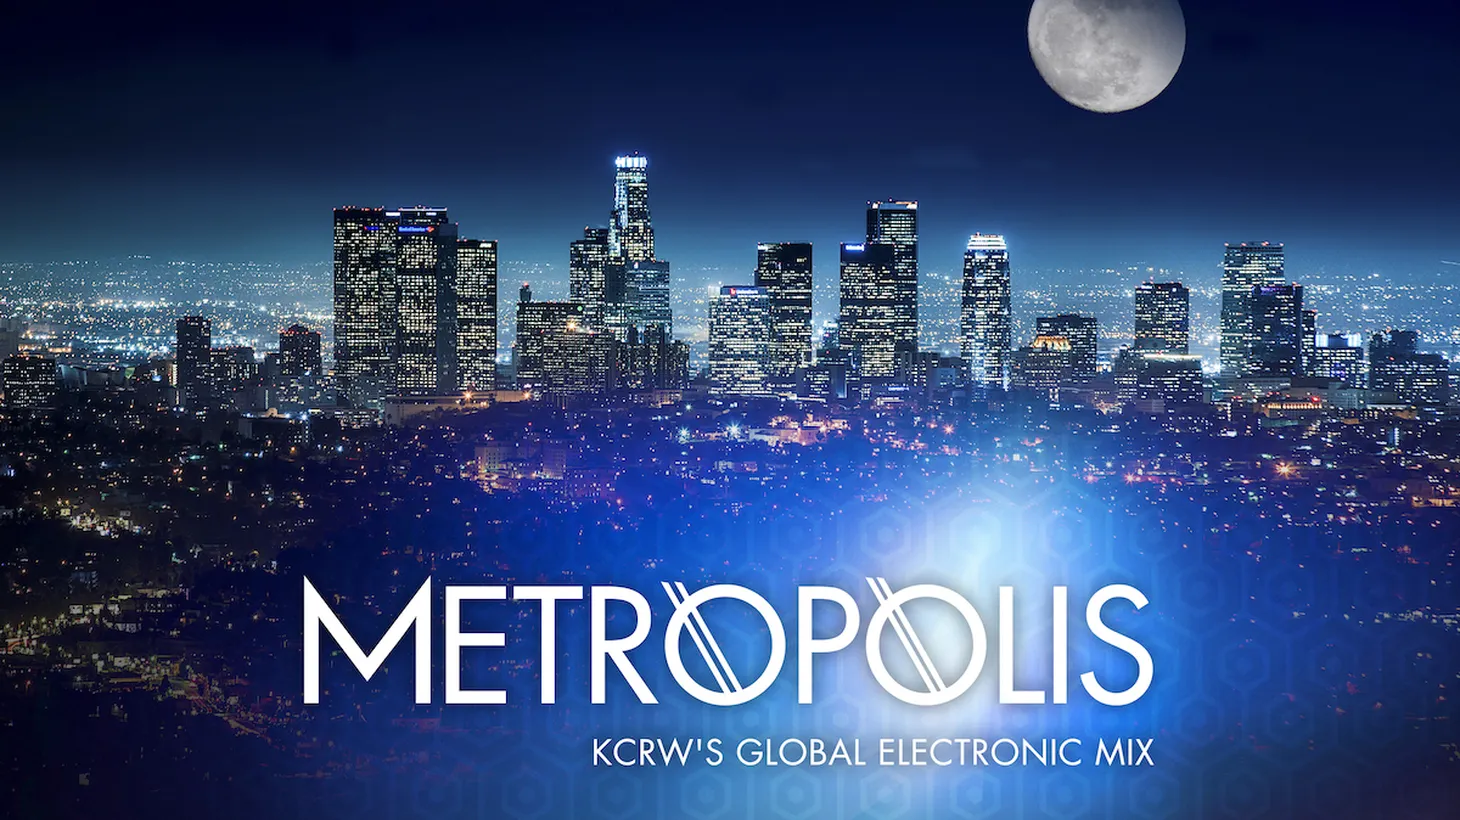 Metropolis playlist, June 26, 2021.